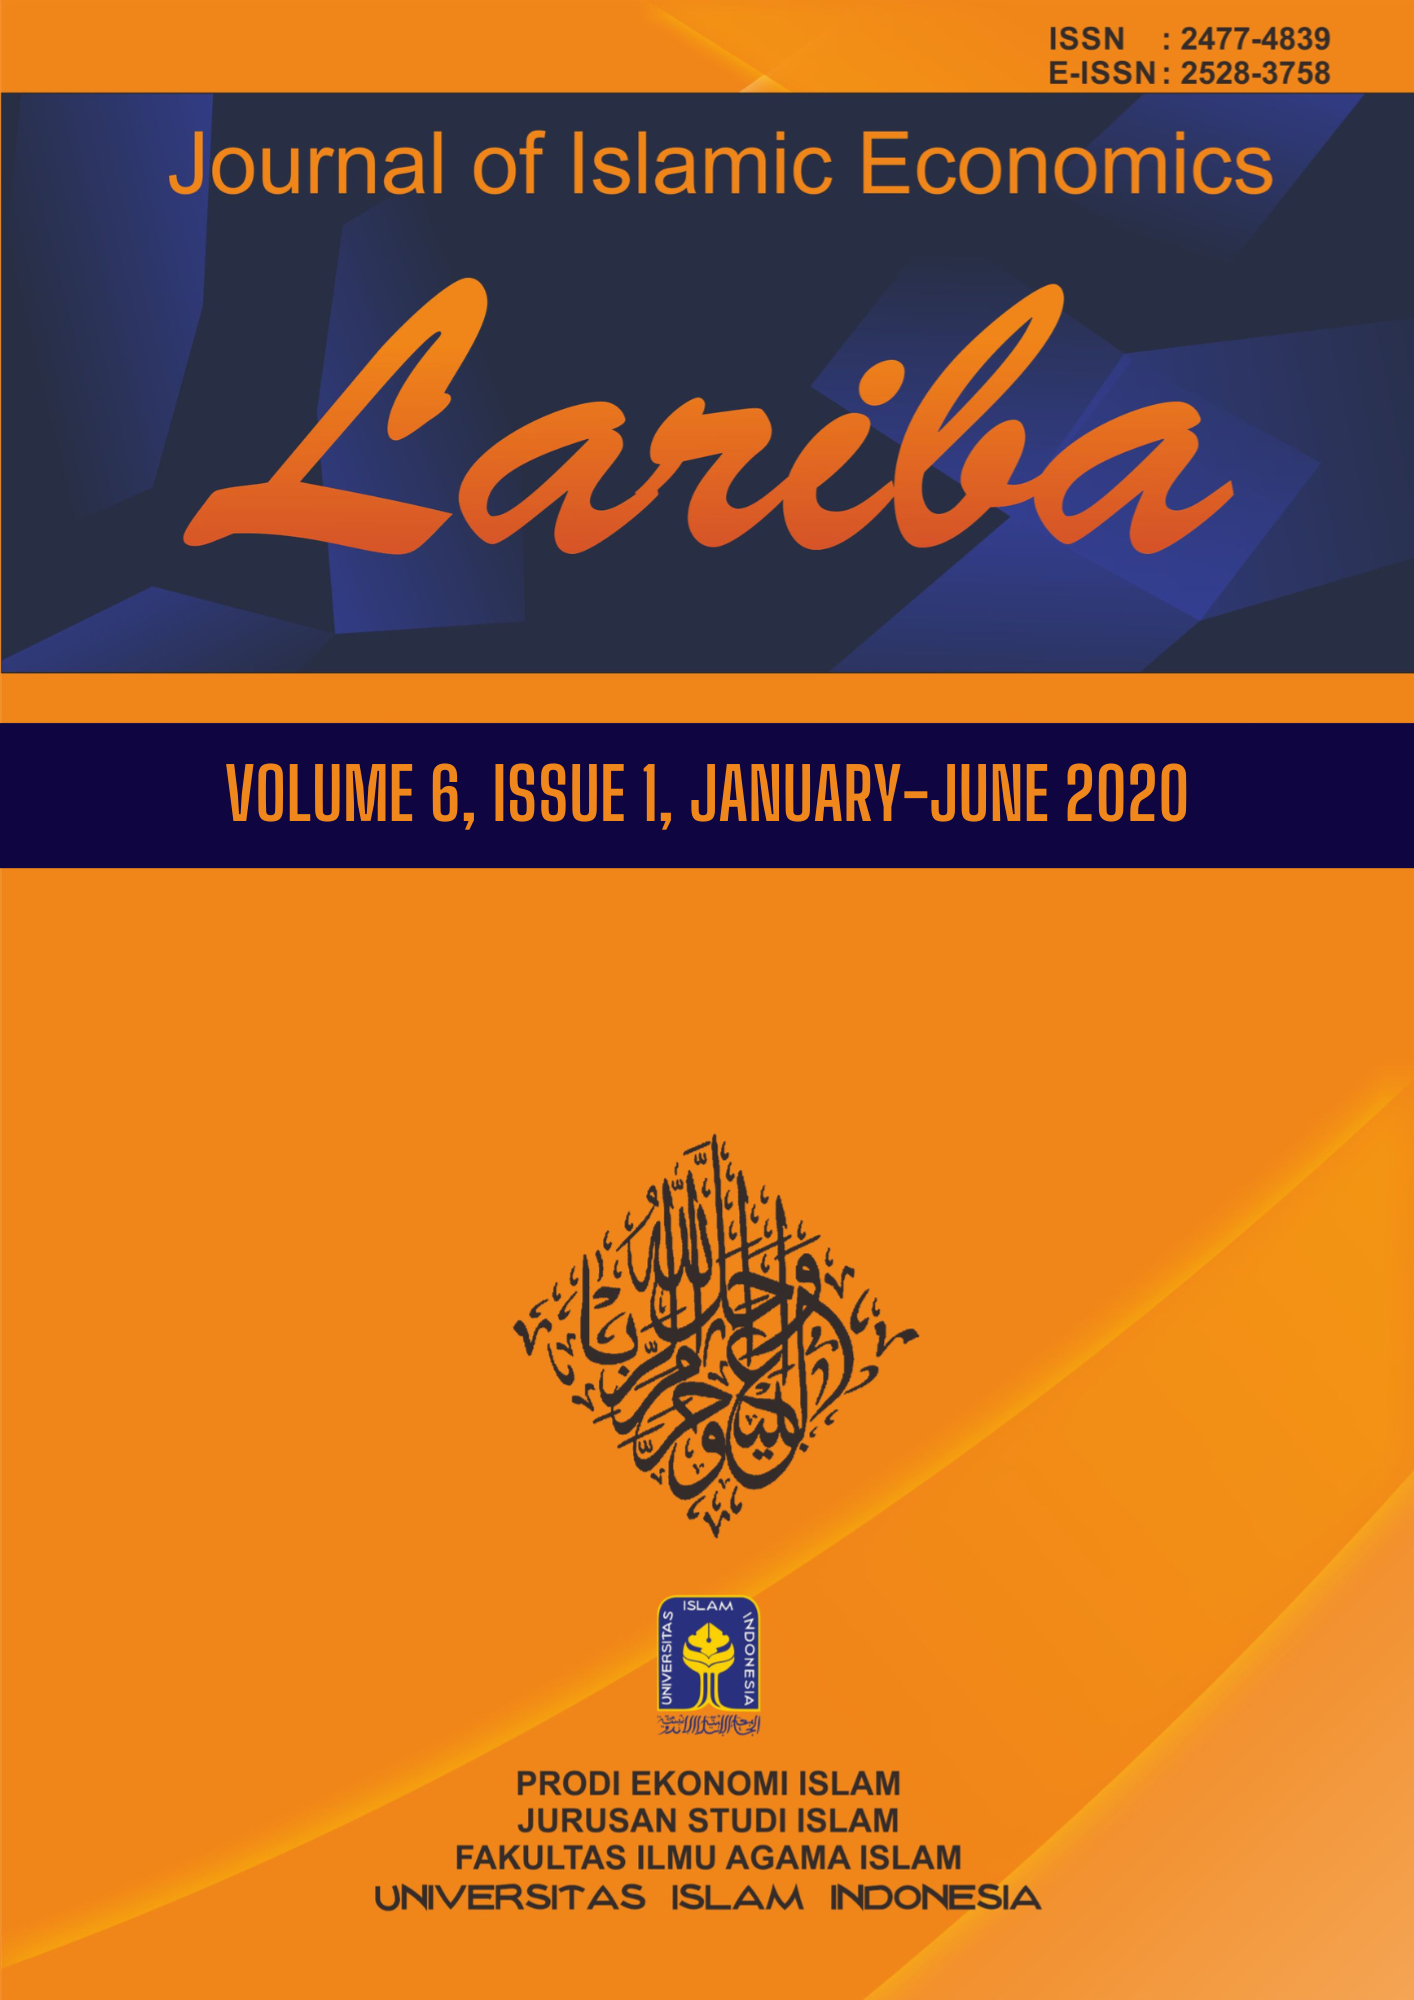 Cover JIELariba Volume 6, Issue 1, January-June 2020